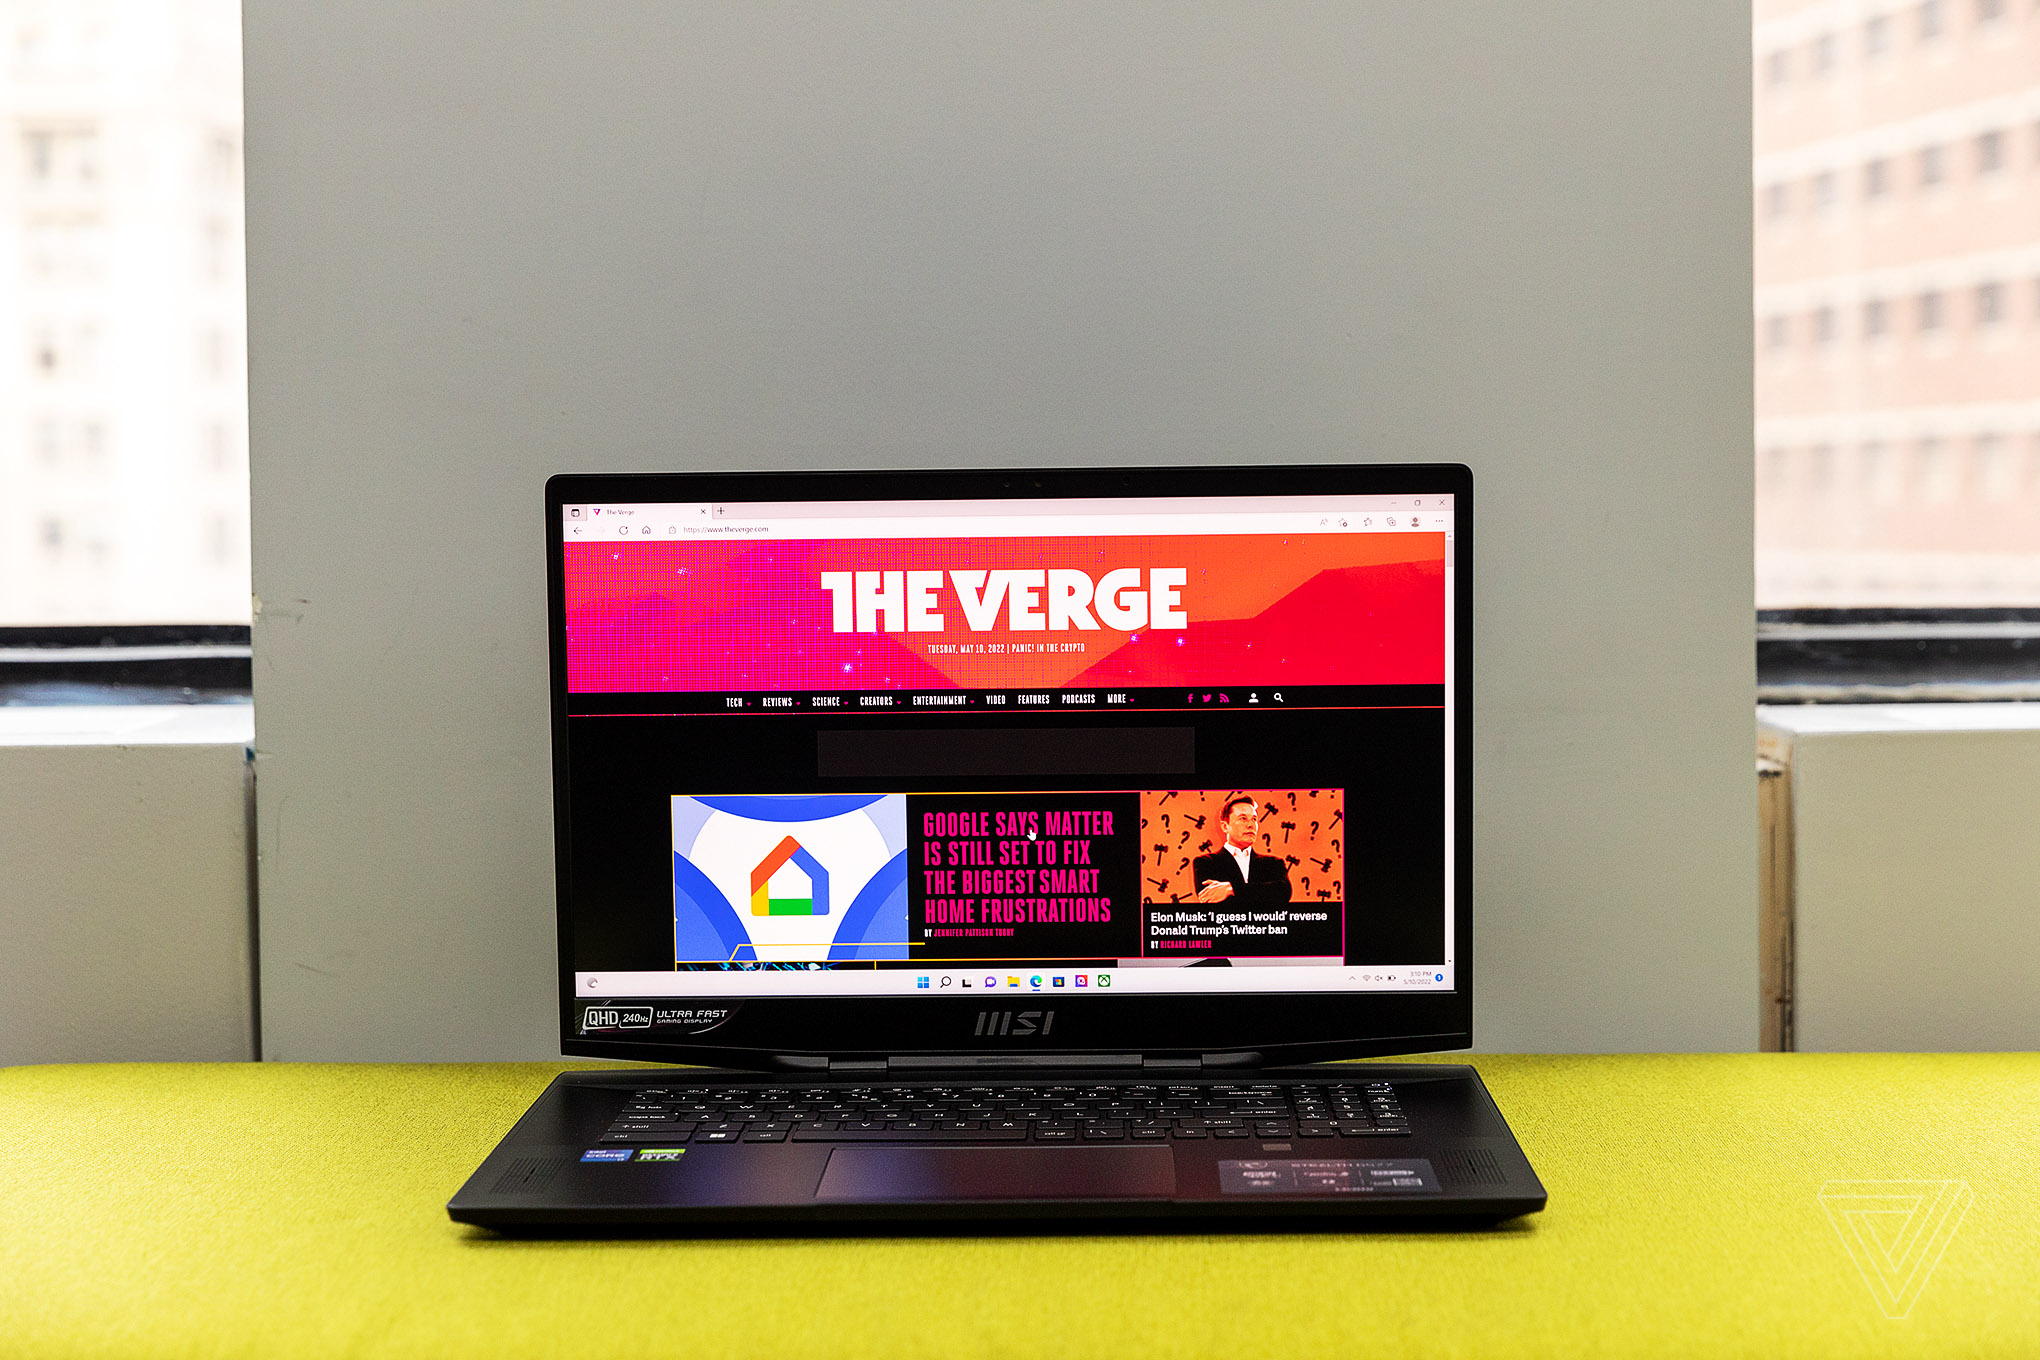 Best gaming laptop in 2022 - The Verge